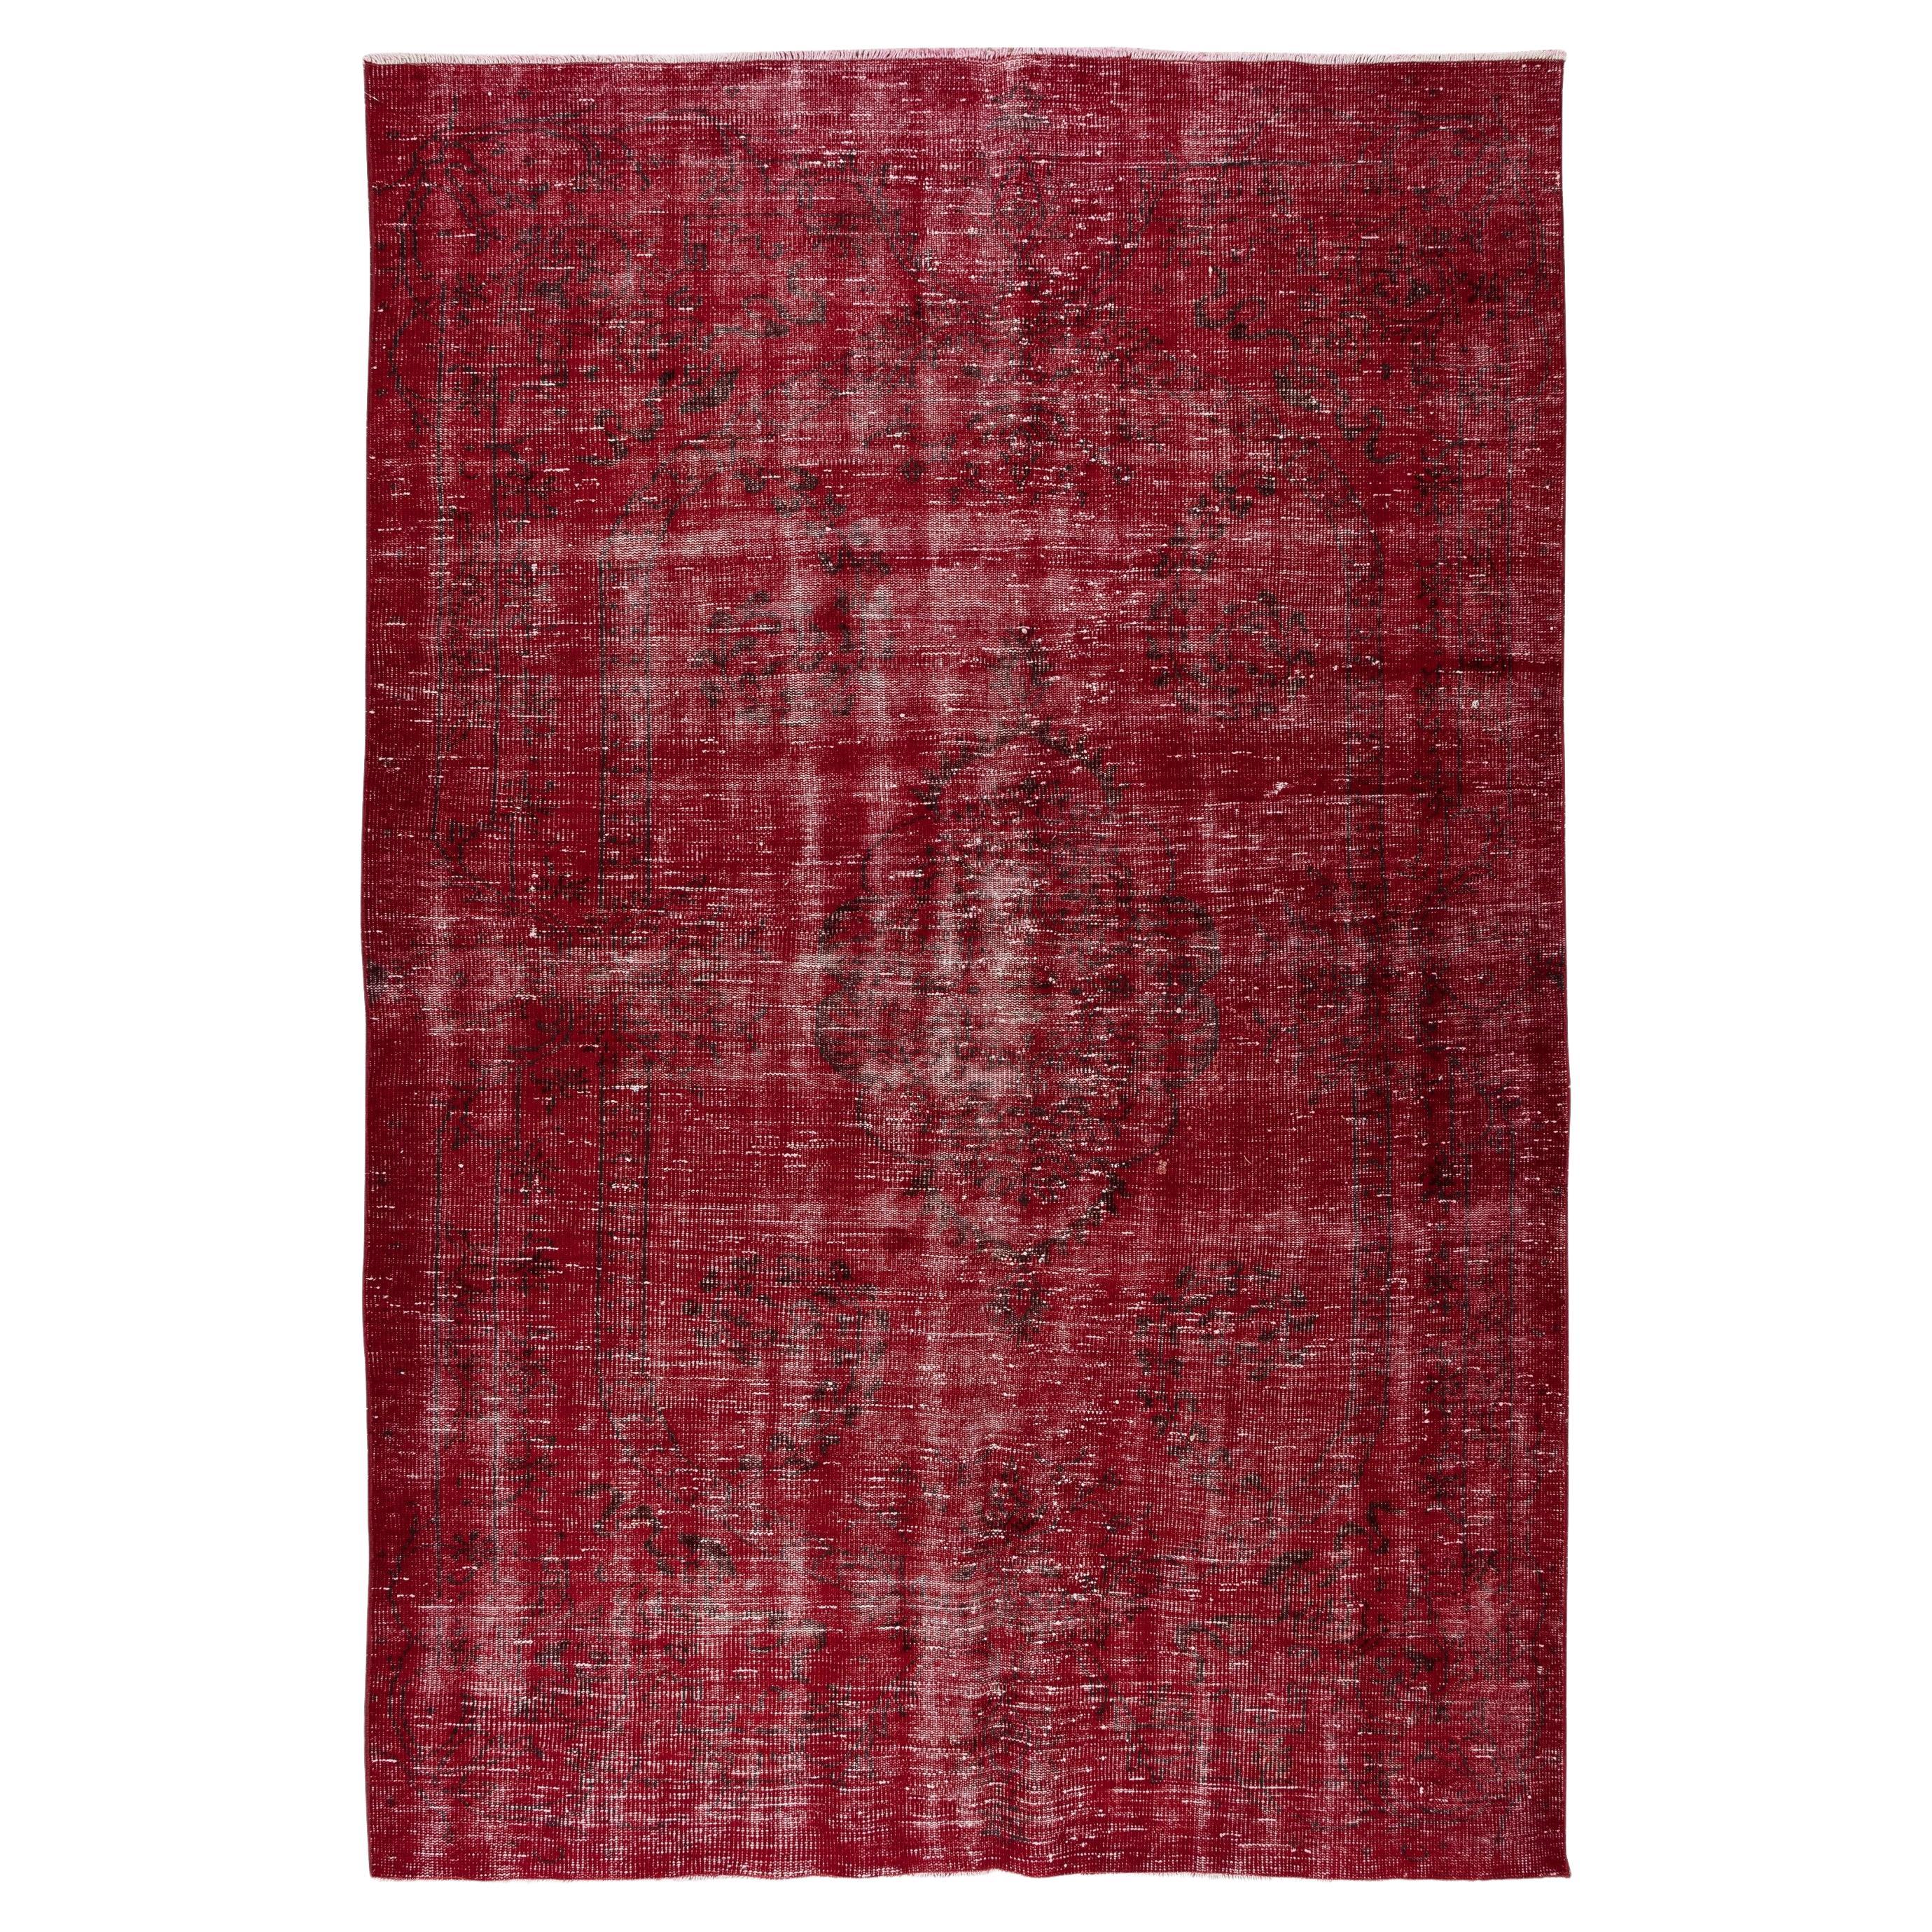 6.3x9.2 ft Turkish Handmade Burgundy Red Rug, Traditional & Modern Wool Carpet